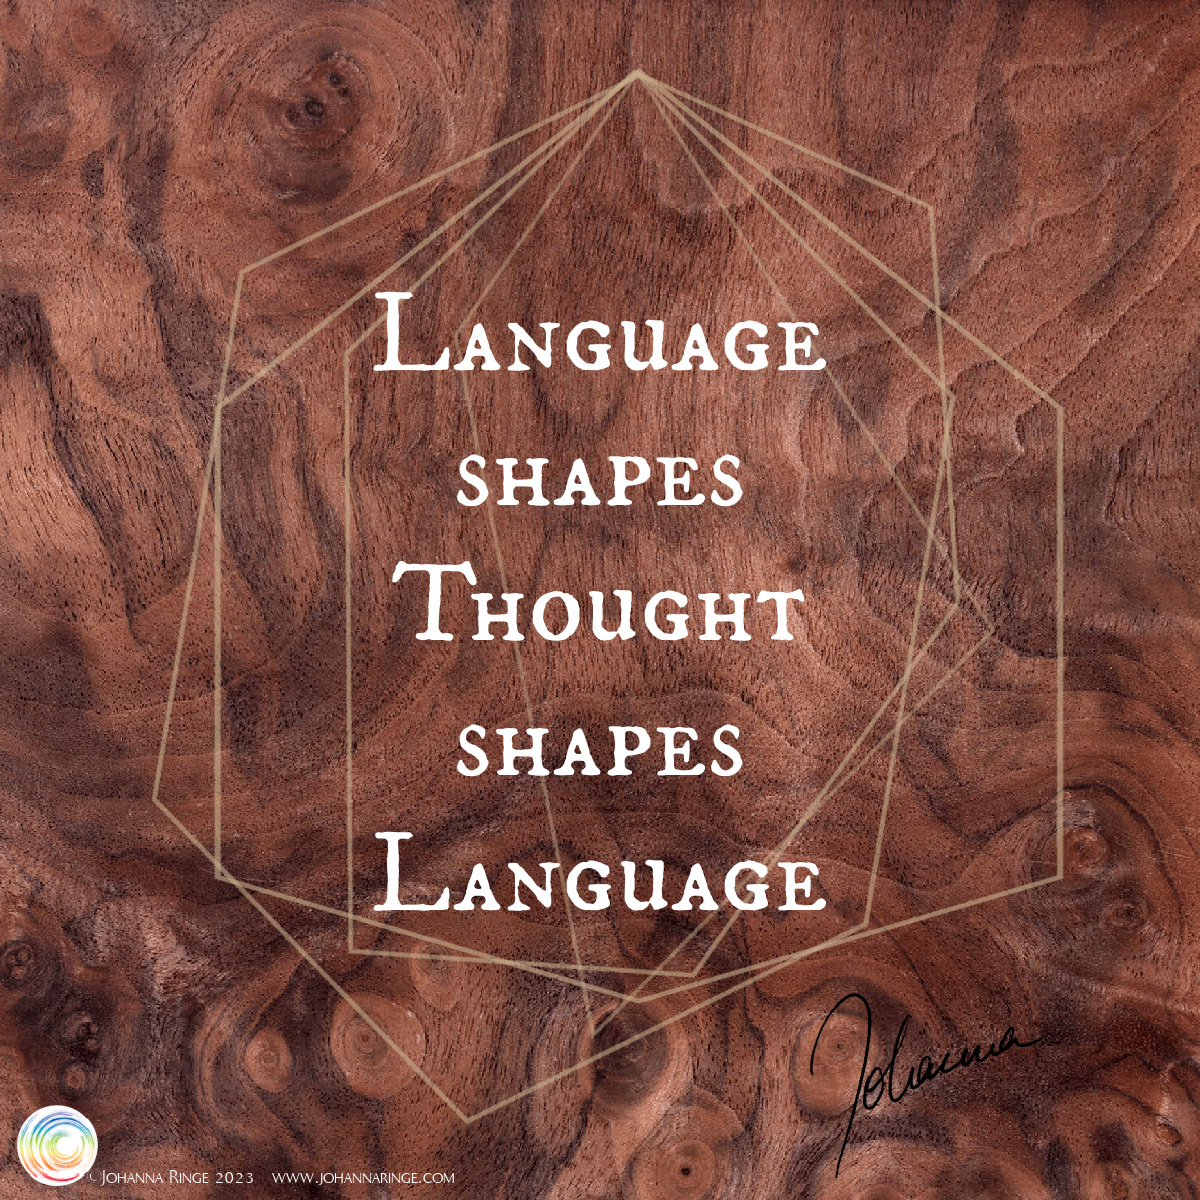 Language shapes thought shapes language (text on wooden background with intersecting geometrical shapes) ©Johanna Ringe 2023, www.johannaringe.com